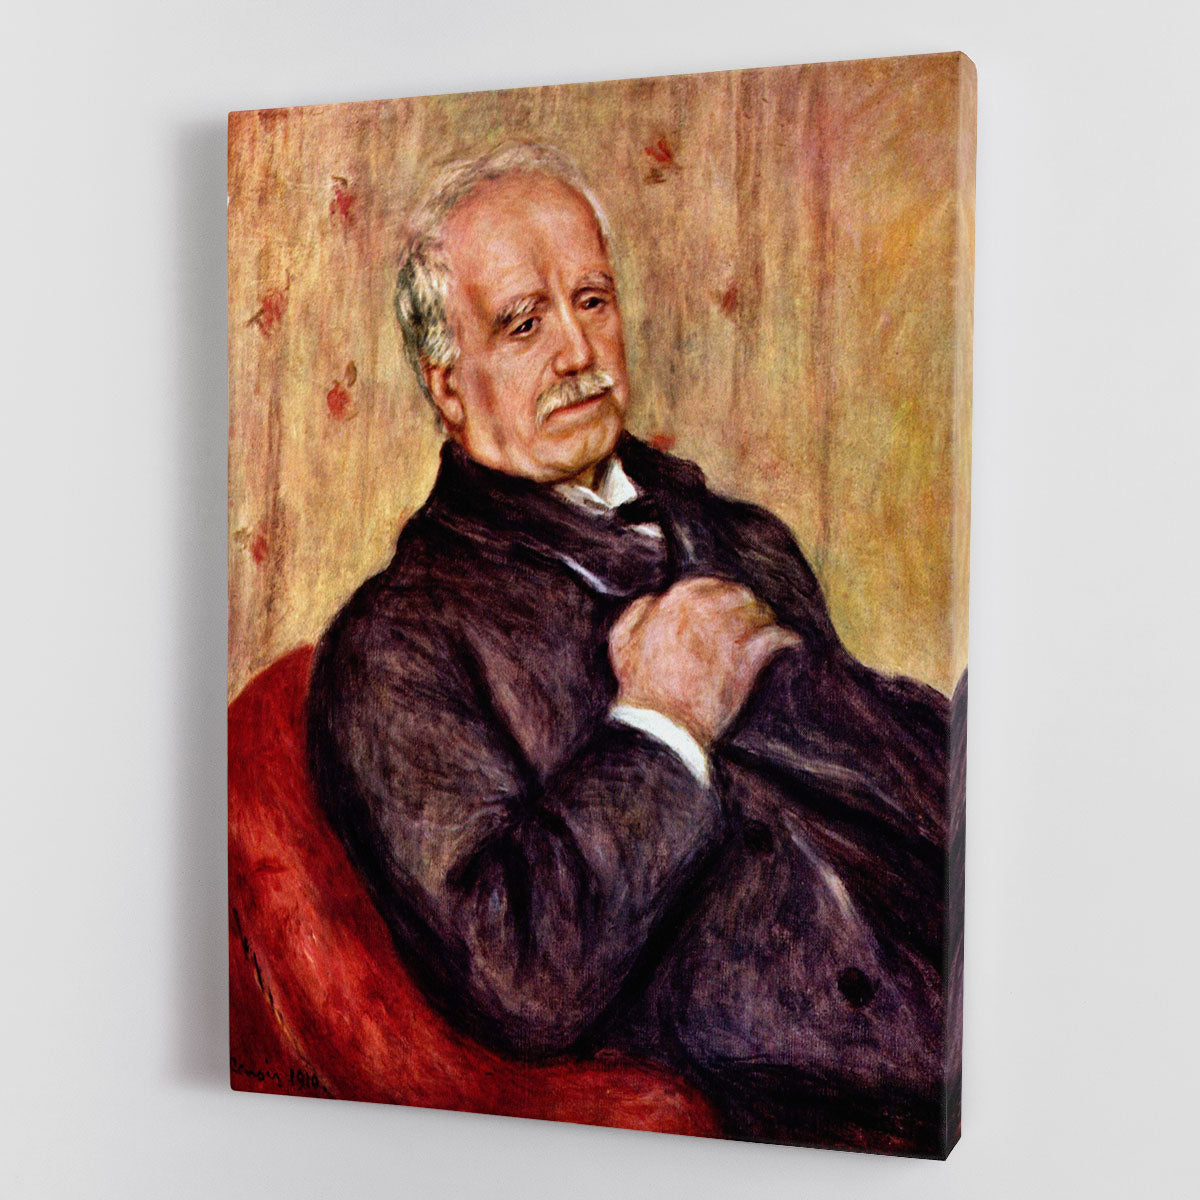 Portrait of Paul Durand Ruel by Renoir Canvas Print or Poster - Canvas Art Rocks - 1